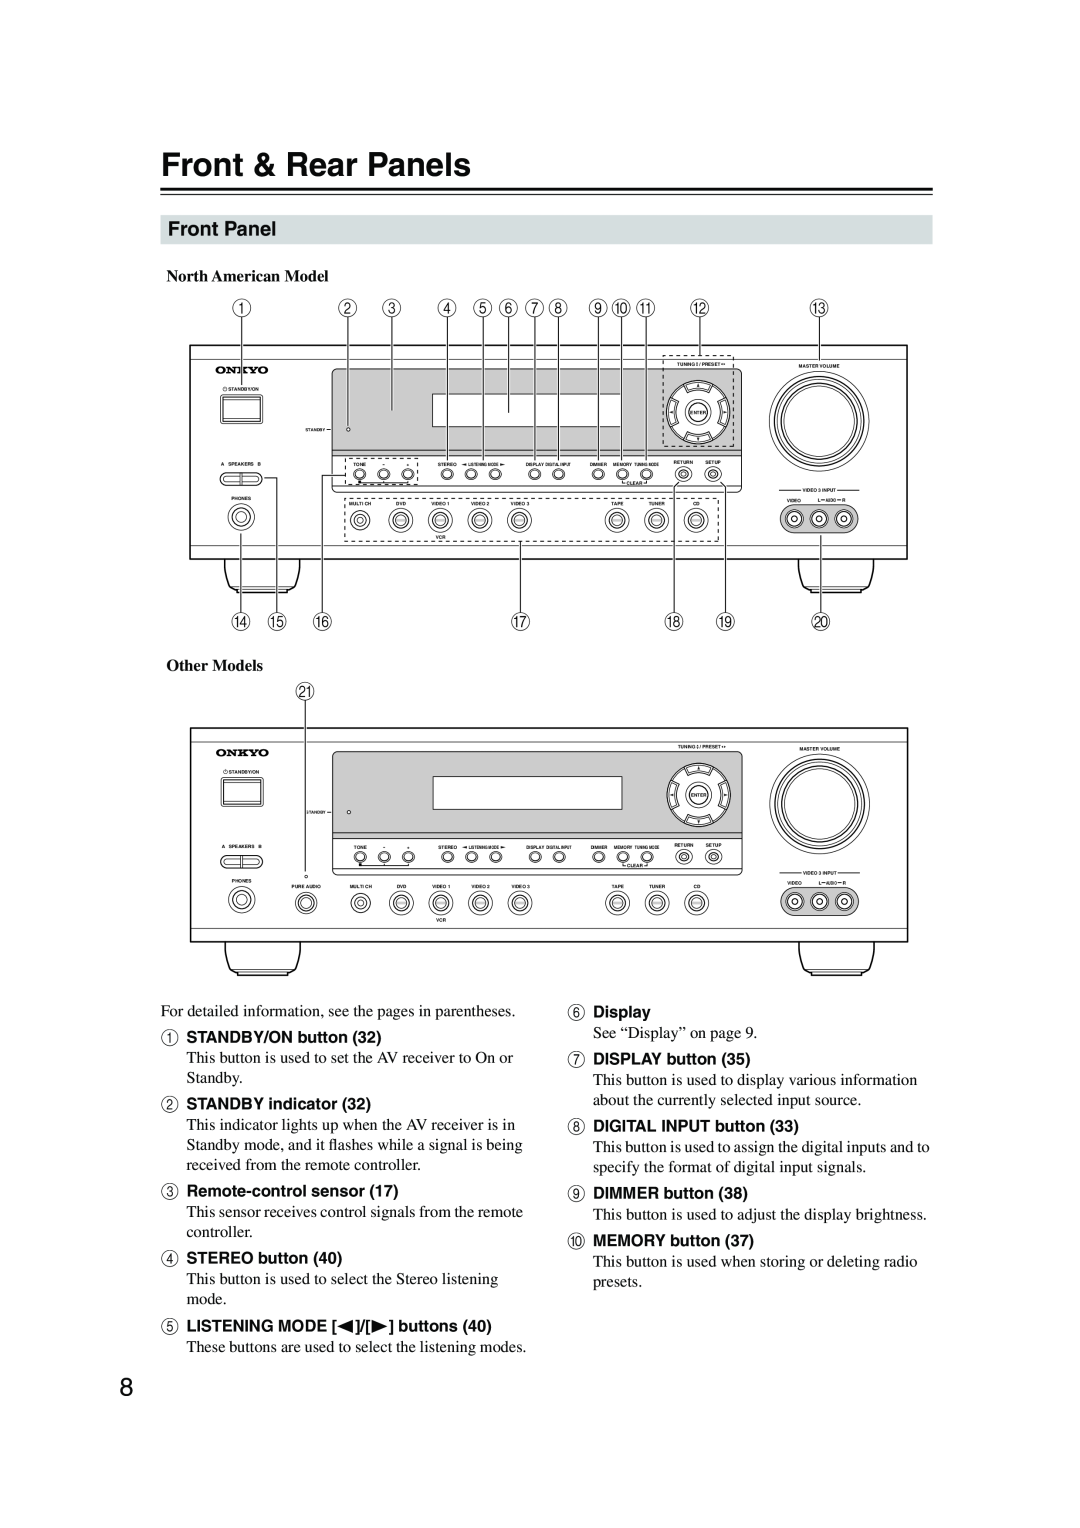 Onkyo HT-S780 instruction manual Front & Rear Panels, Front Panel, 2 3 4 5 6 78 9J K L, North American Model, Other Models 